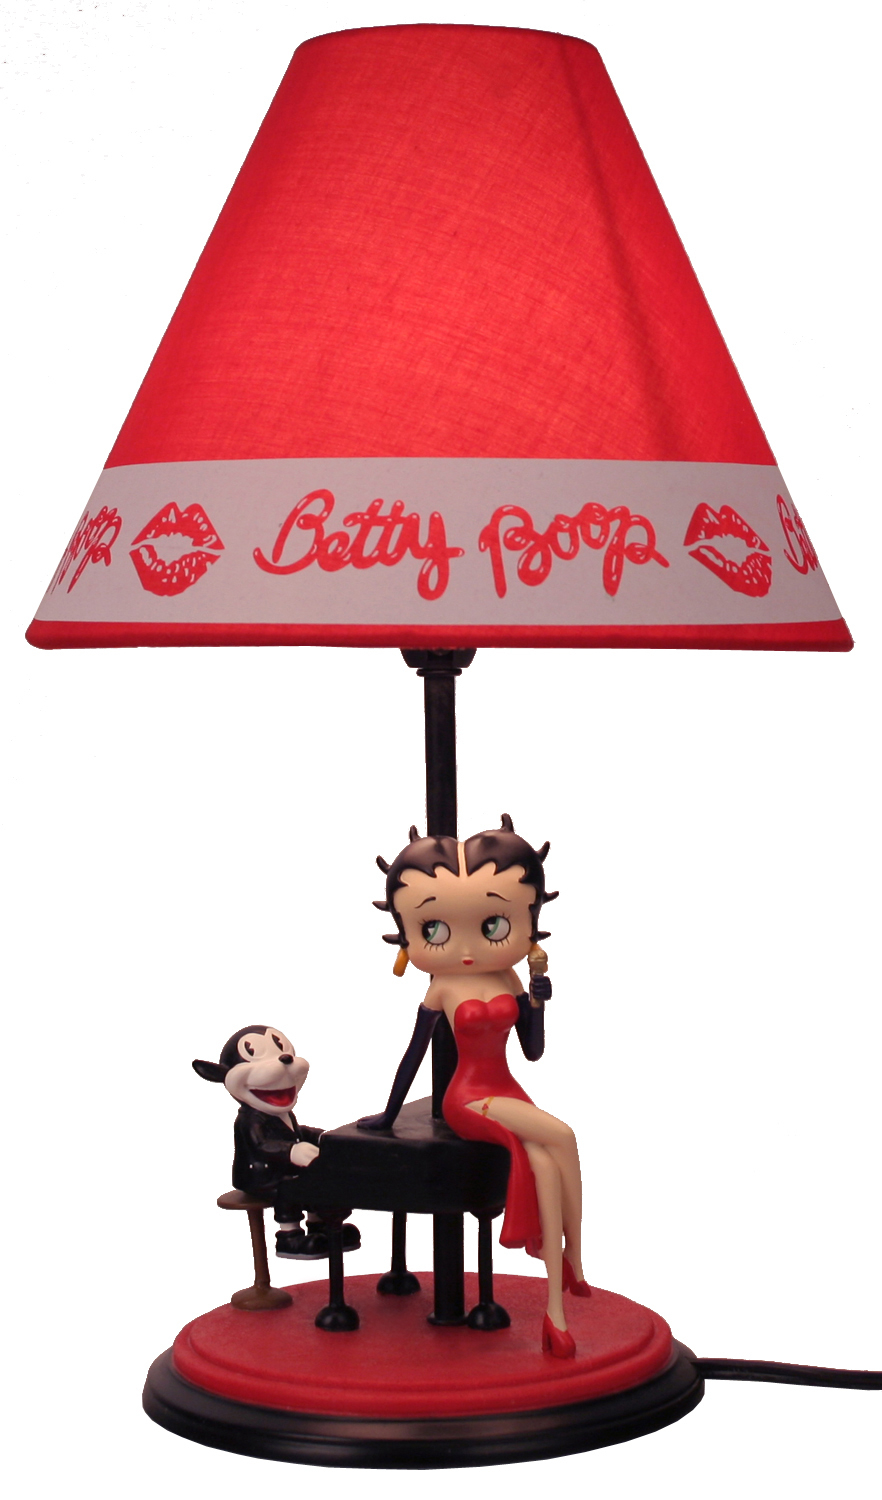 Betty boop lamp 12